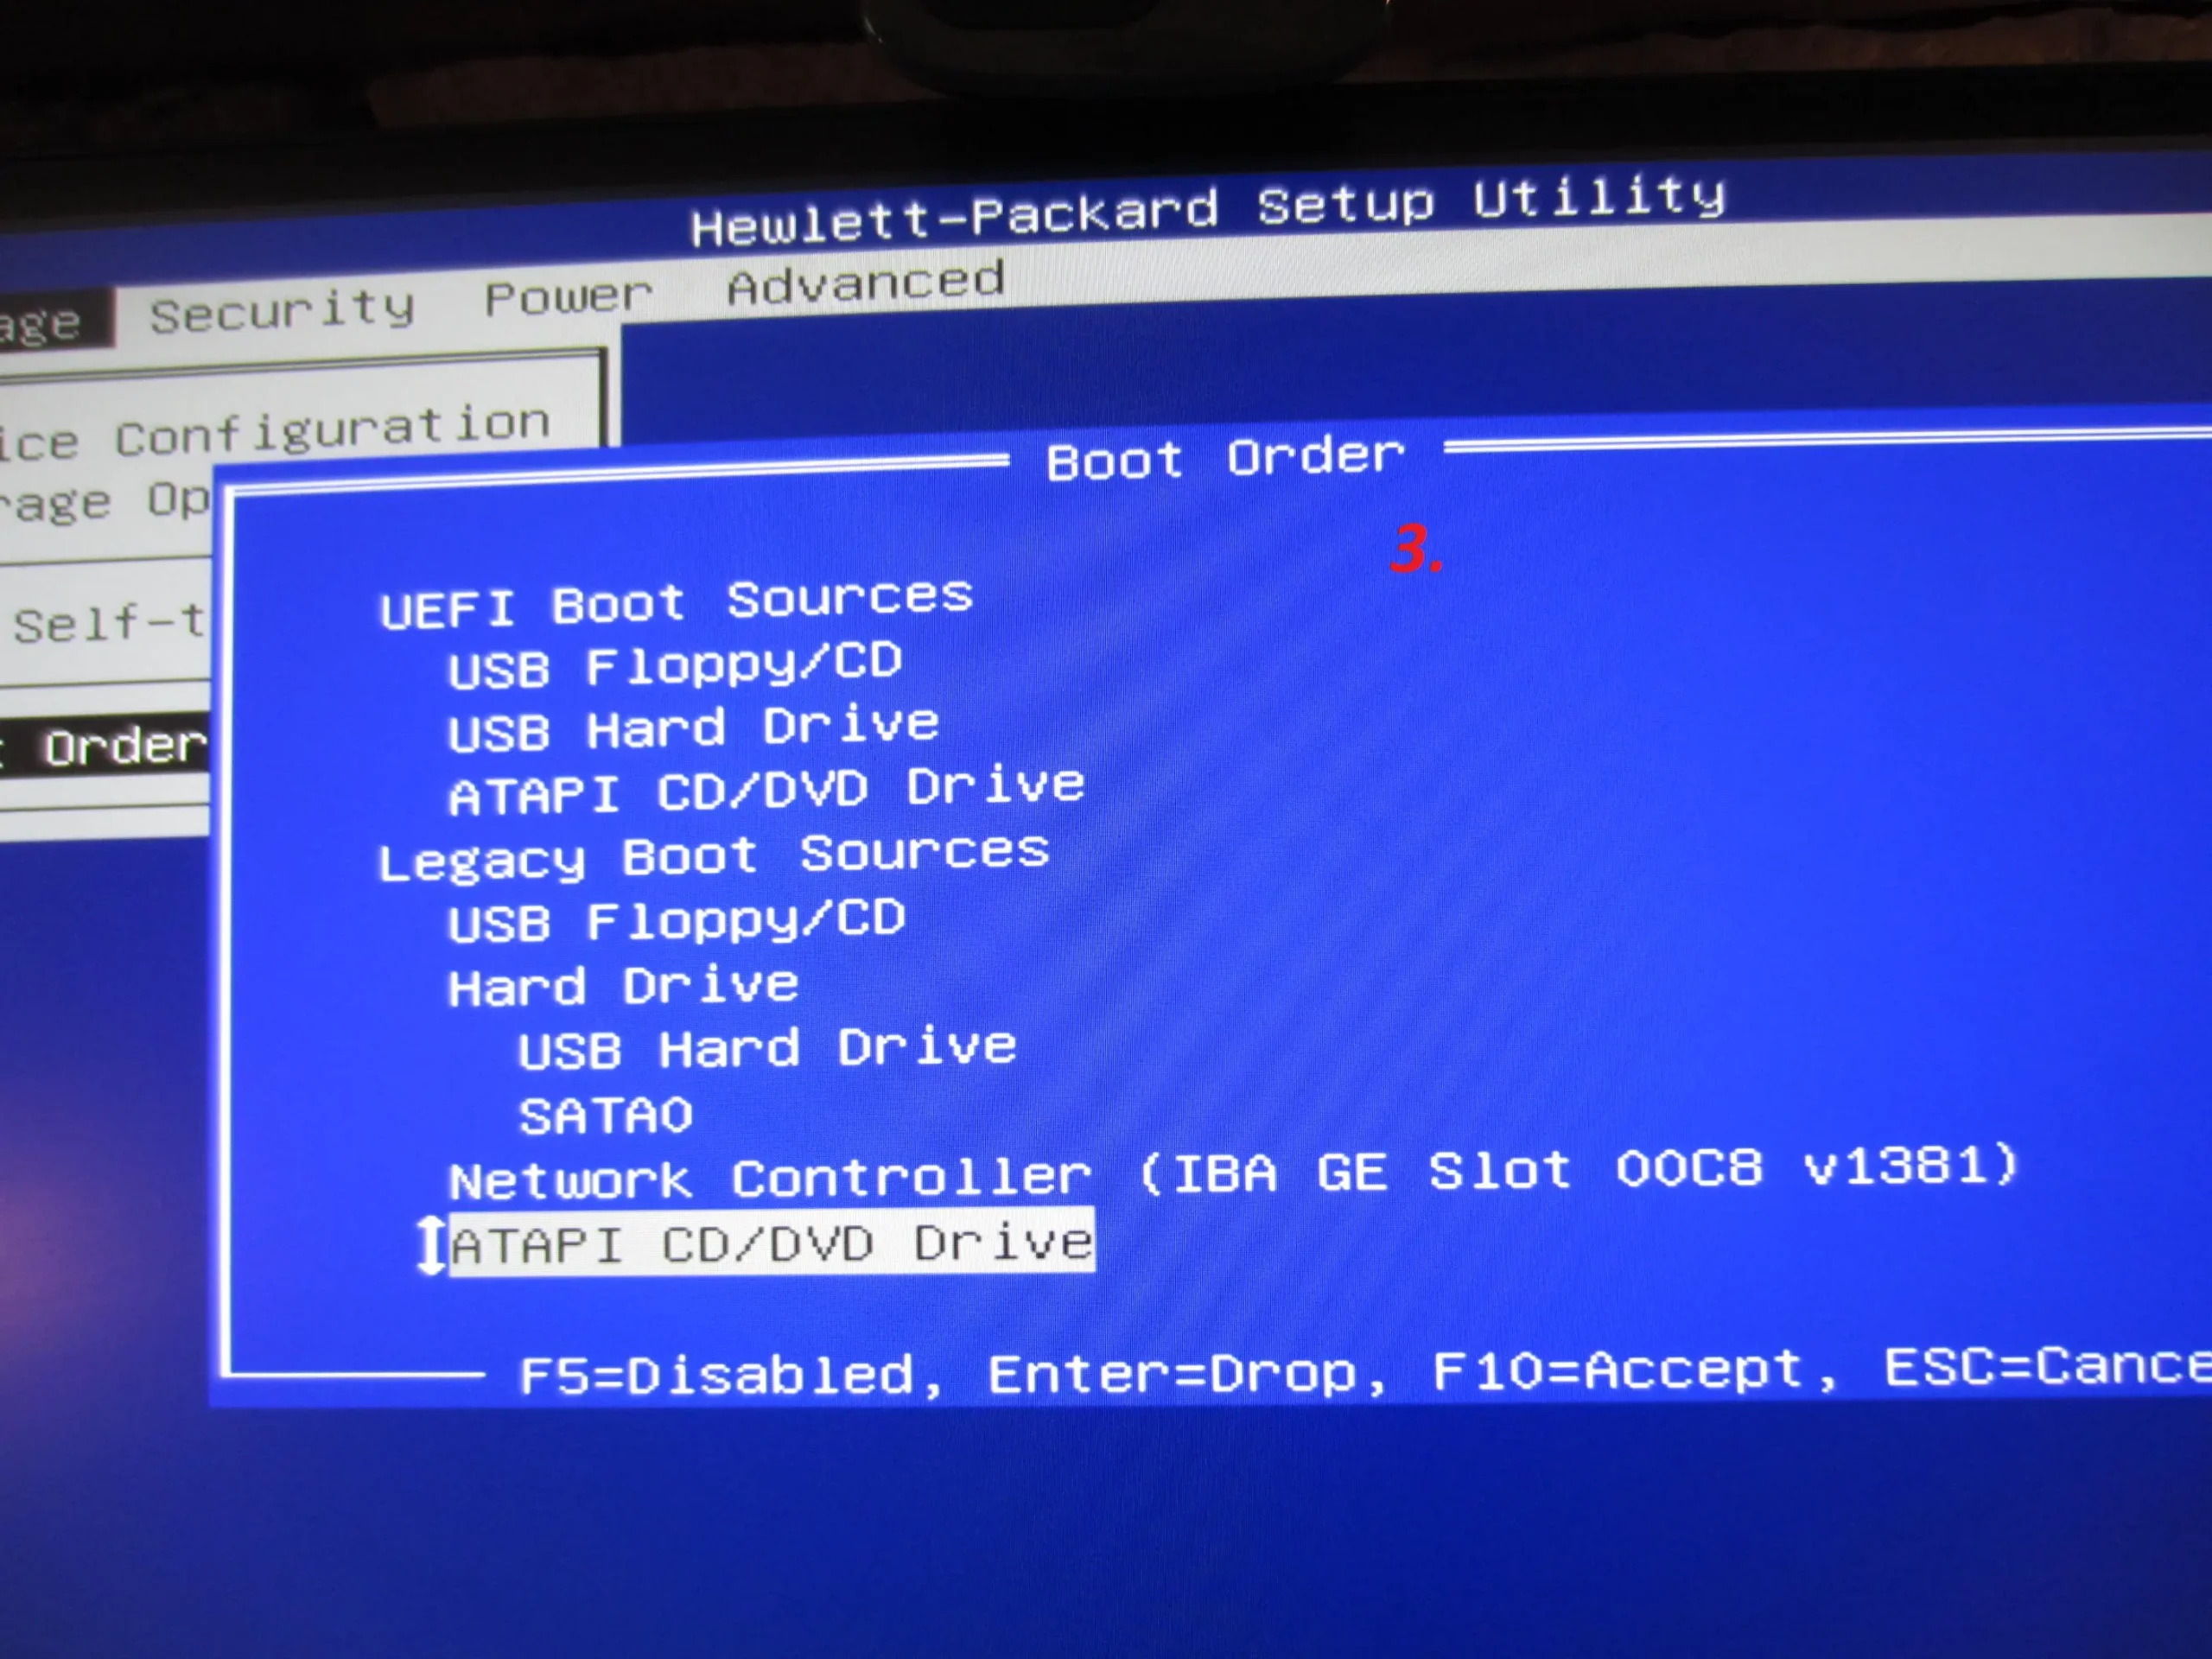 hewlett packard setup utility bios boot - How do I get into my computer's BIOS setup utility